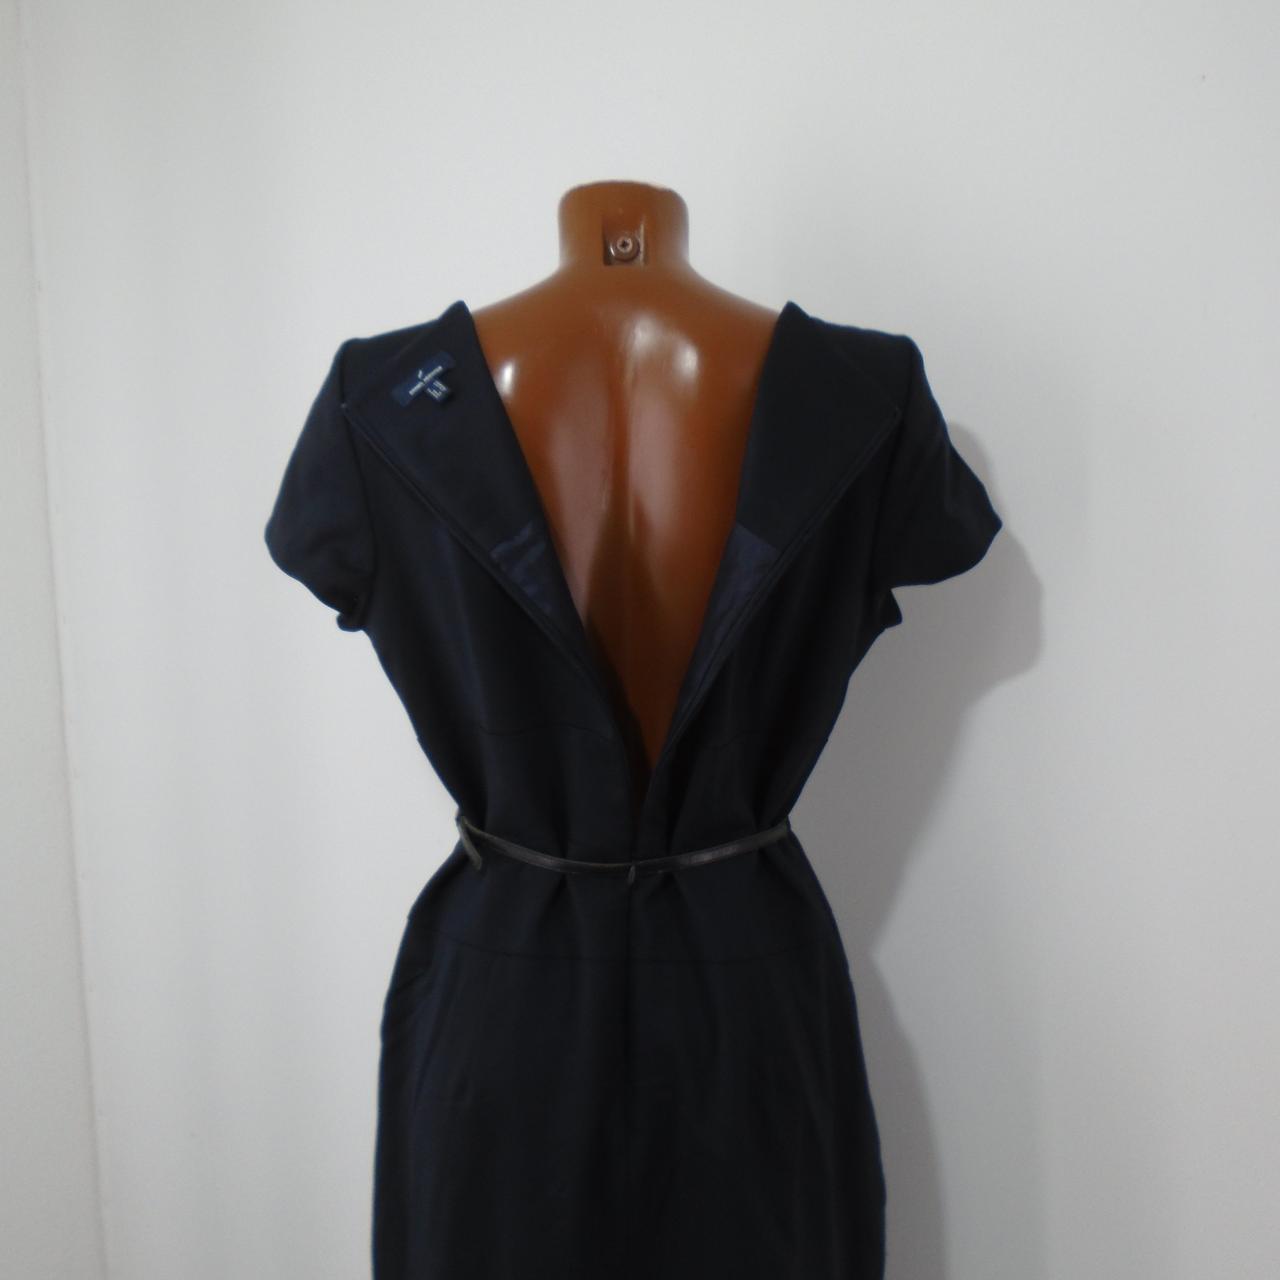 Women's Dress Daniel Hechter. Black. XXXXL. Used. Very good